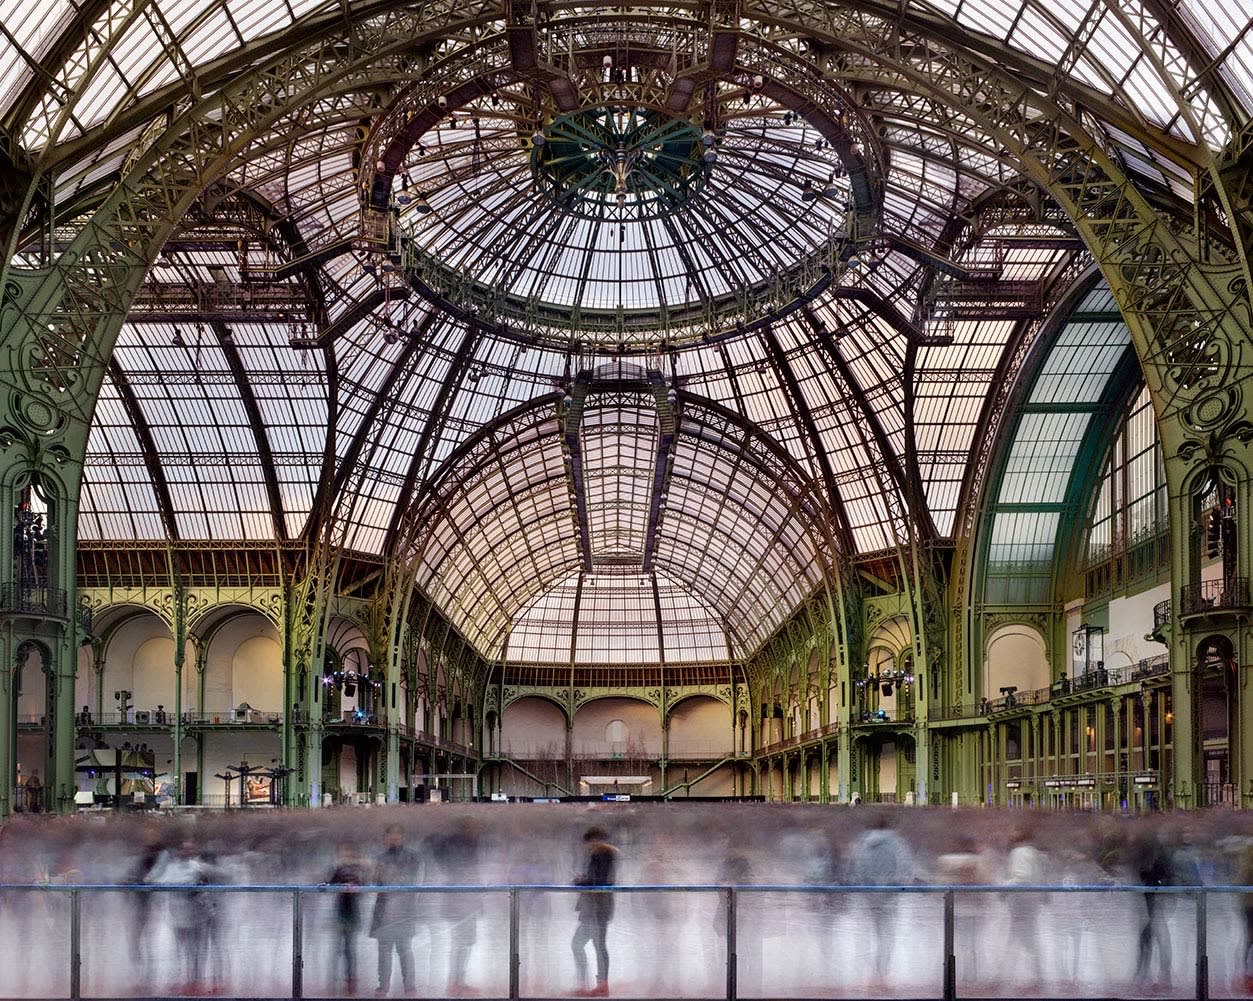 Matthew Pillsbury photograph of Grand Palais in Paris with people ice skating portrayed through long exposure shot